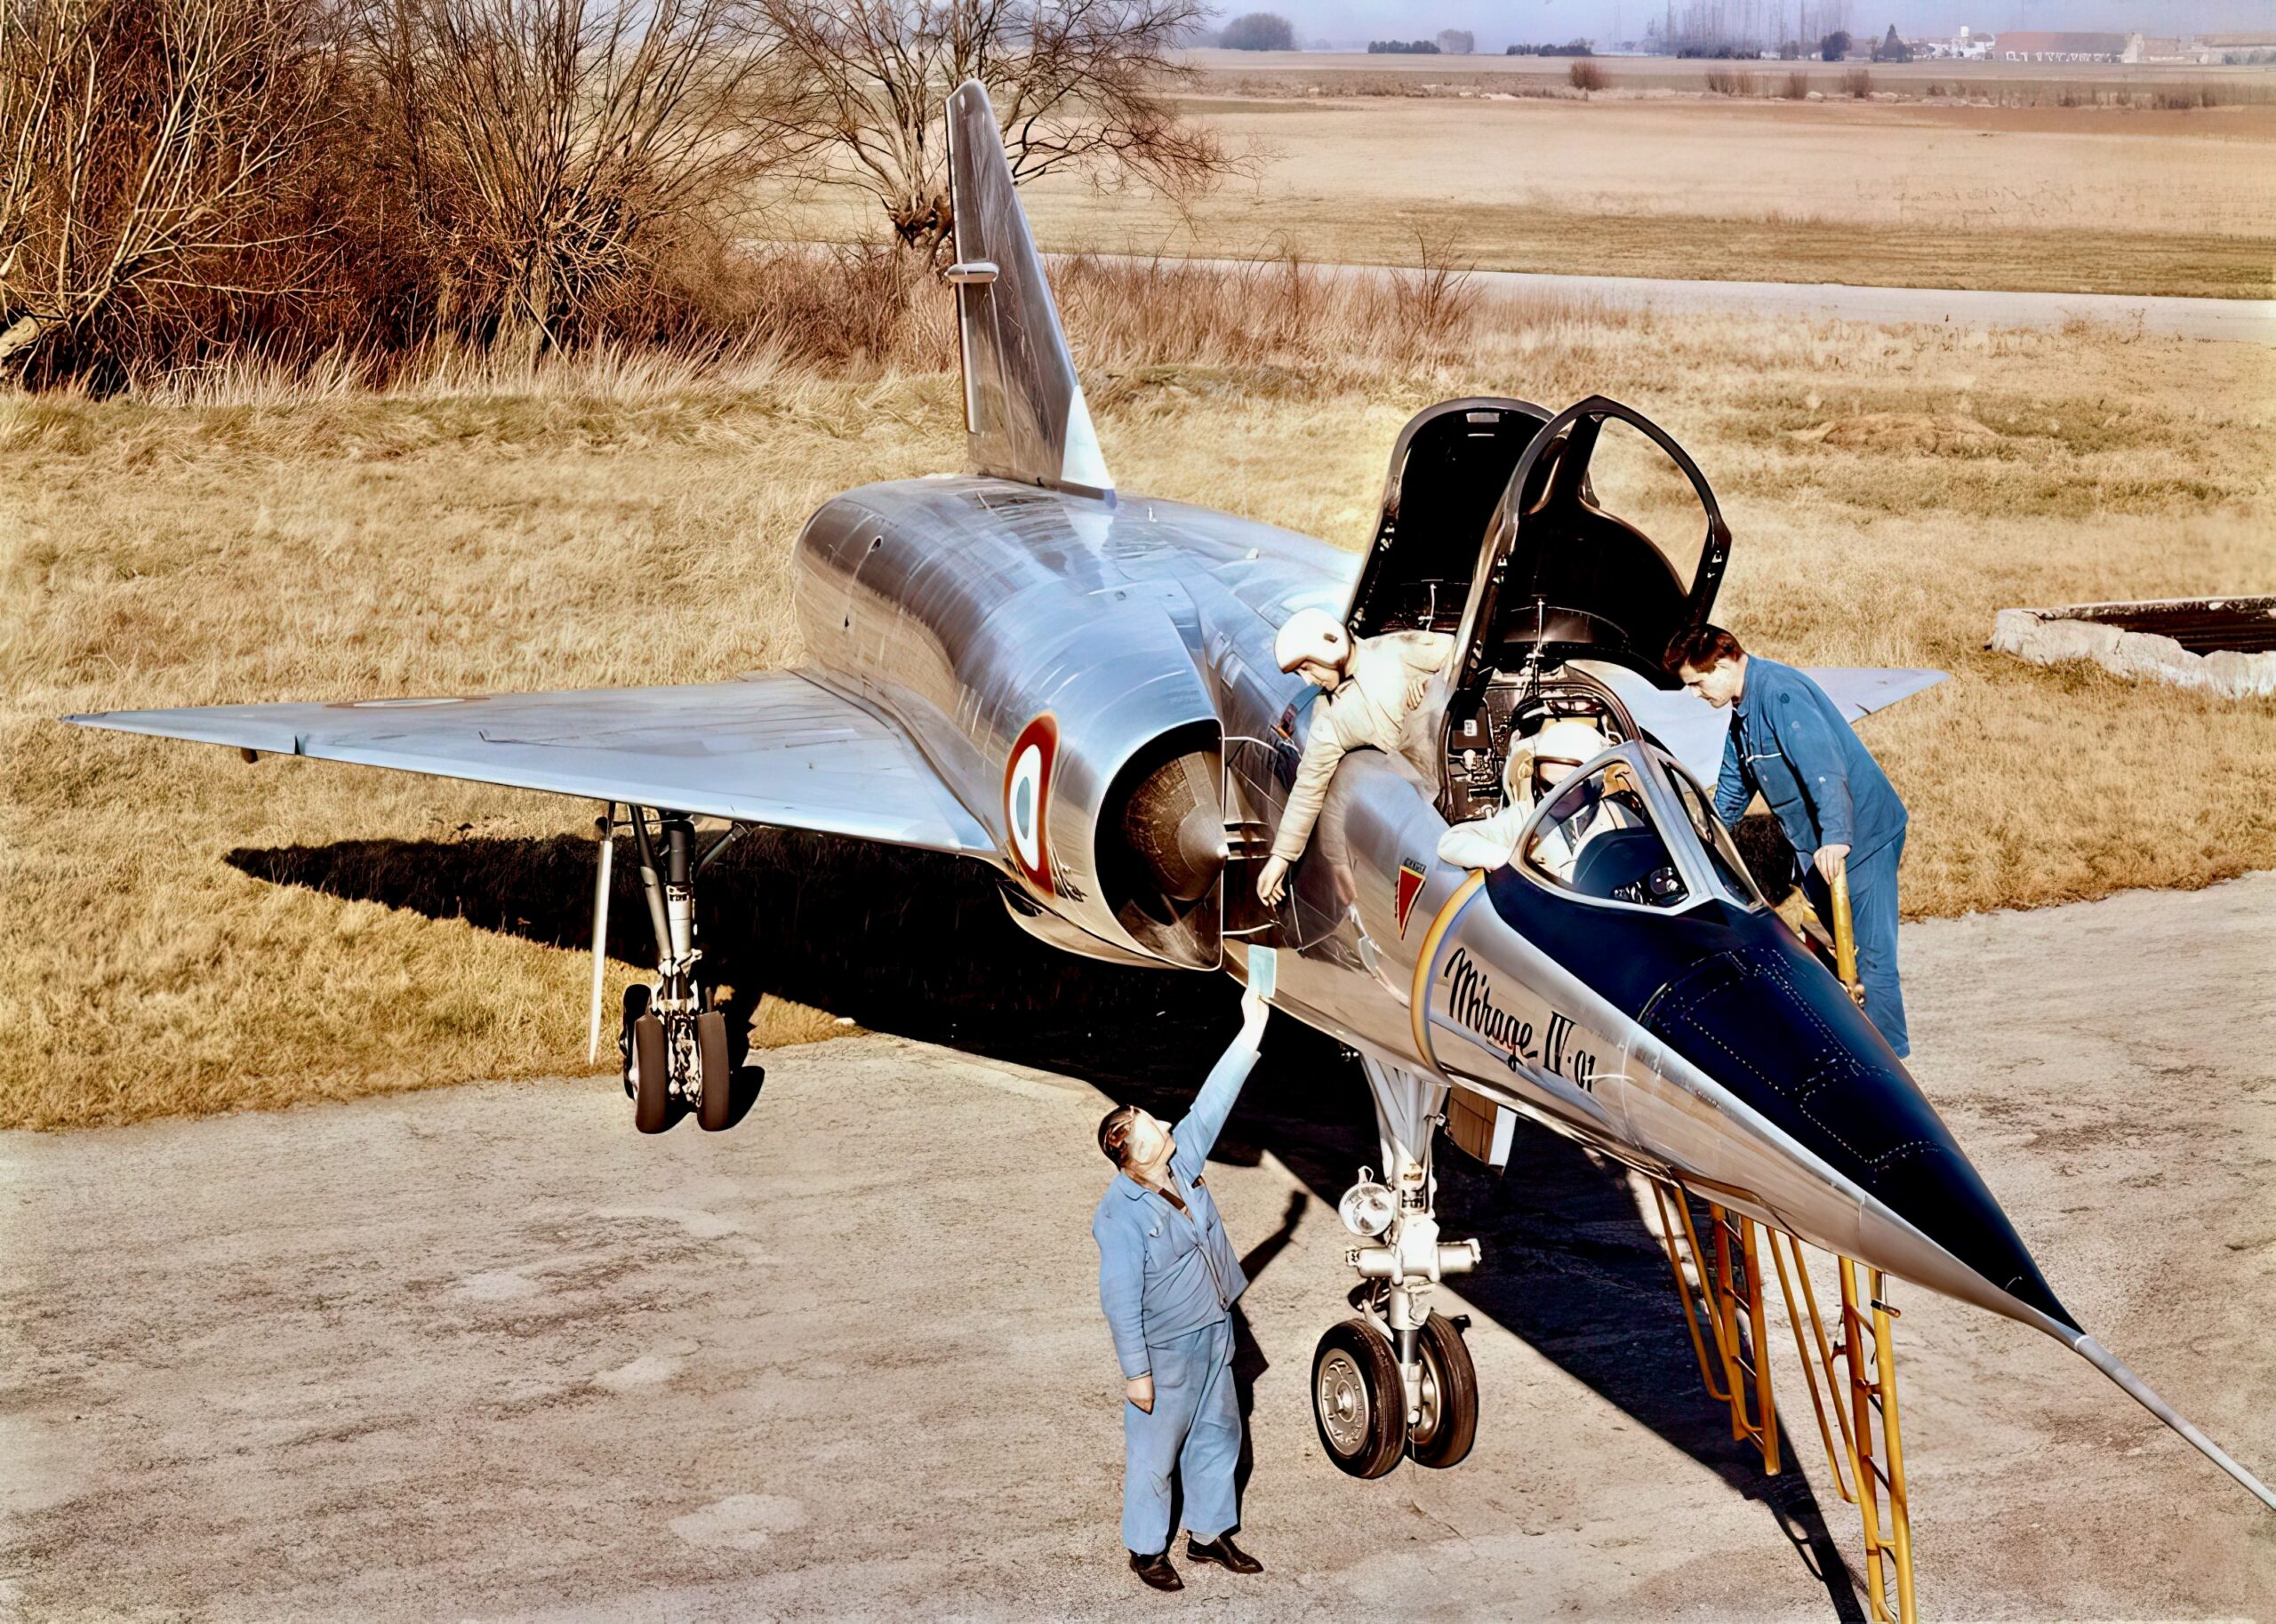 Mirage IV A01